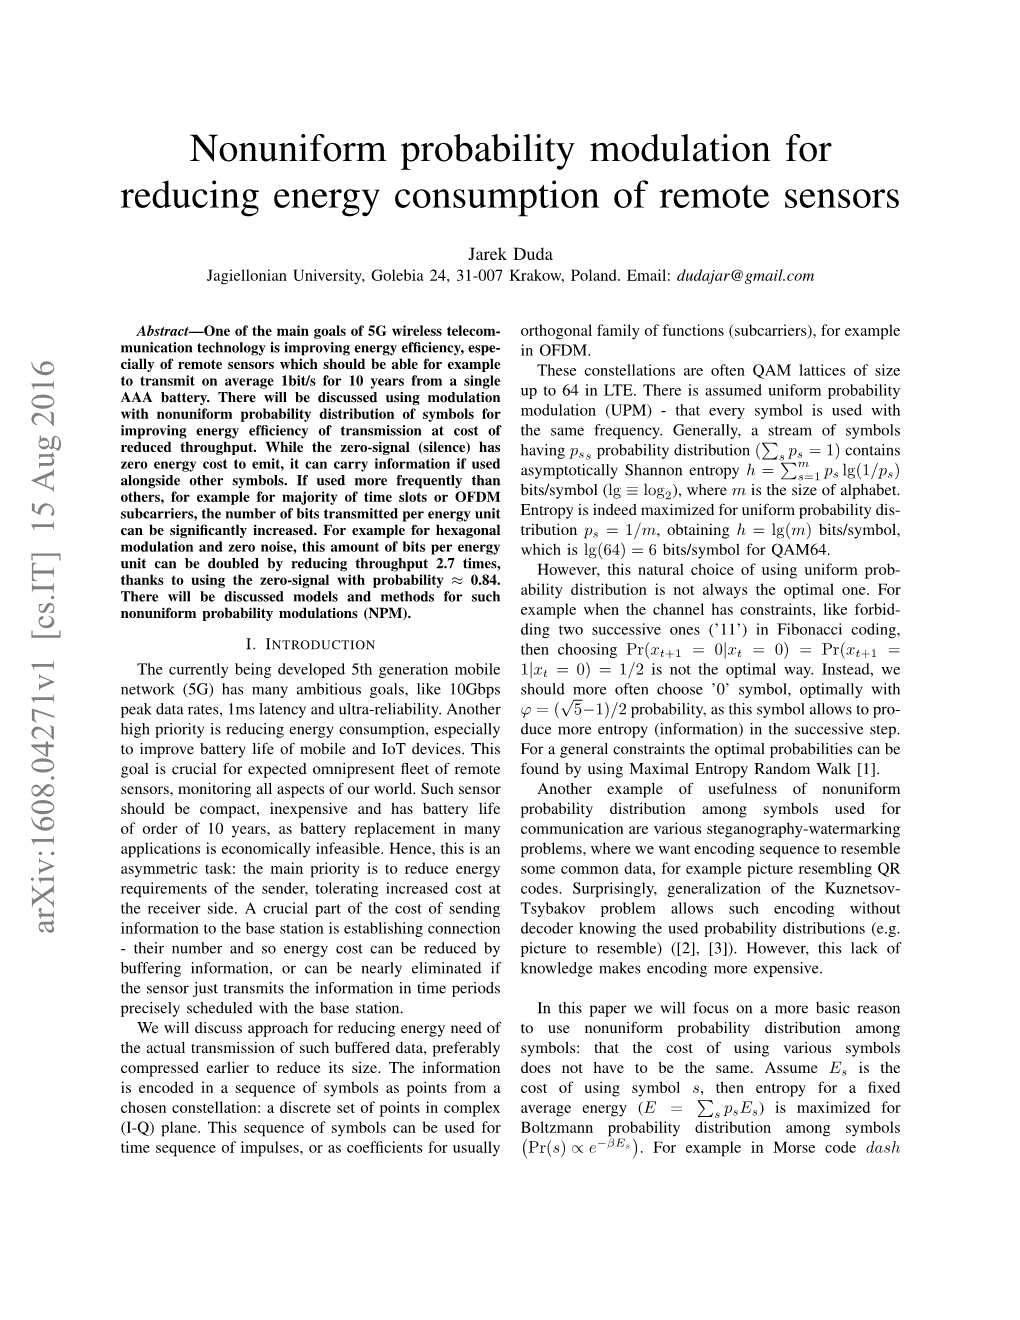 Nonuniform Probability Modulation for Reducing Energy Consumption of Remote Sensors